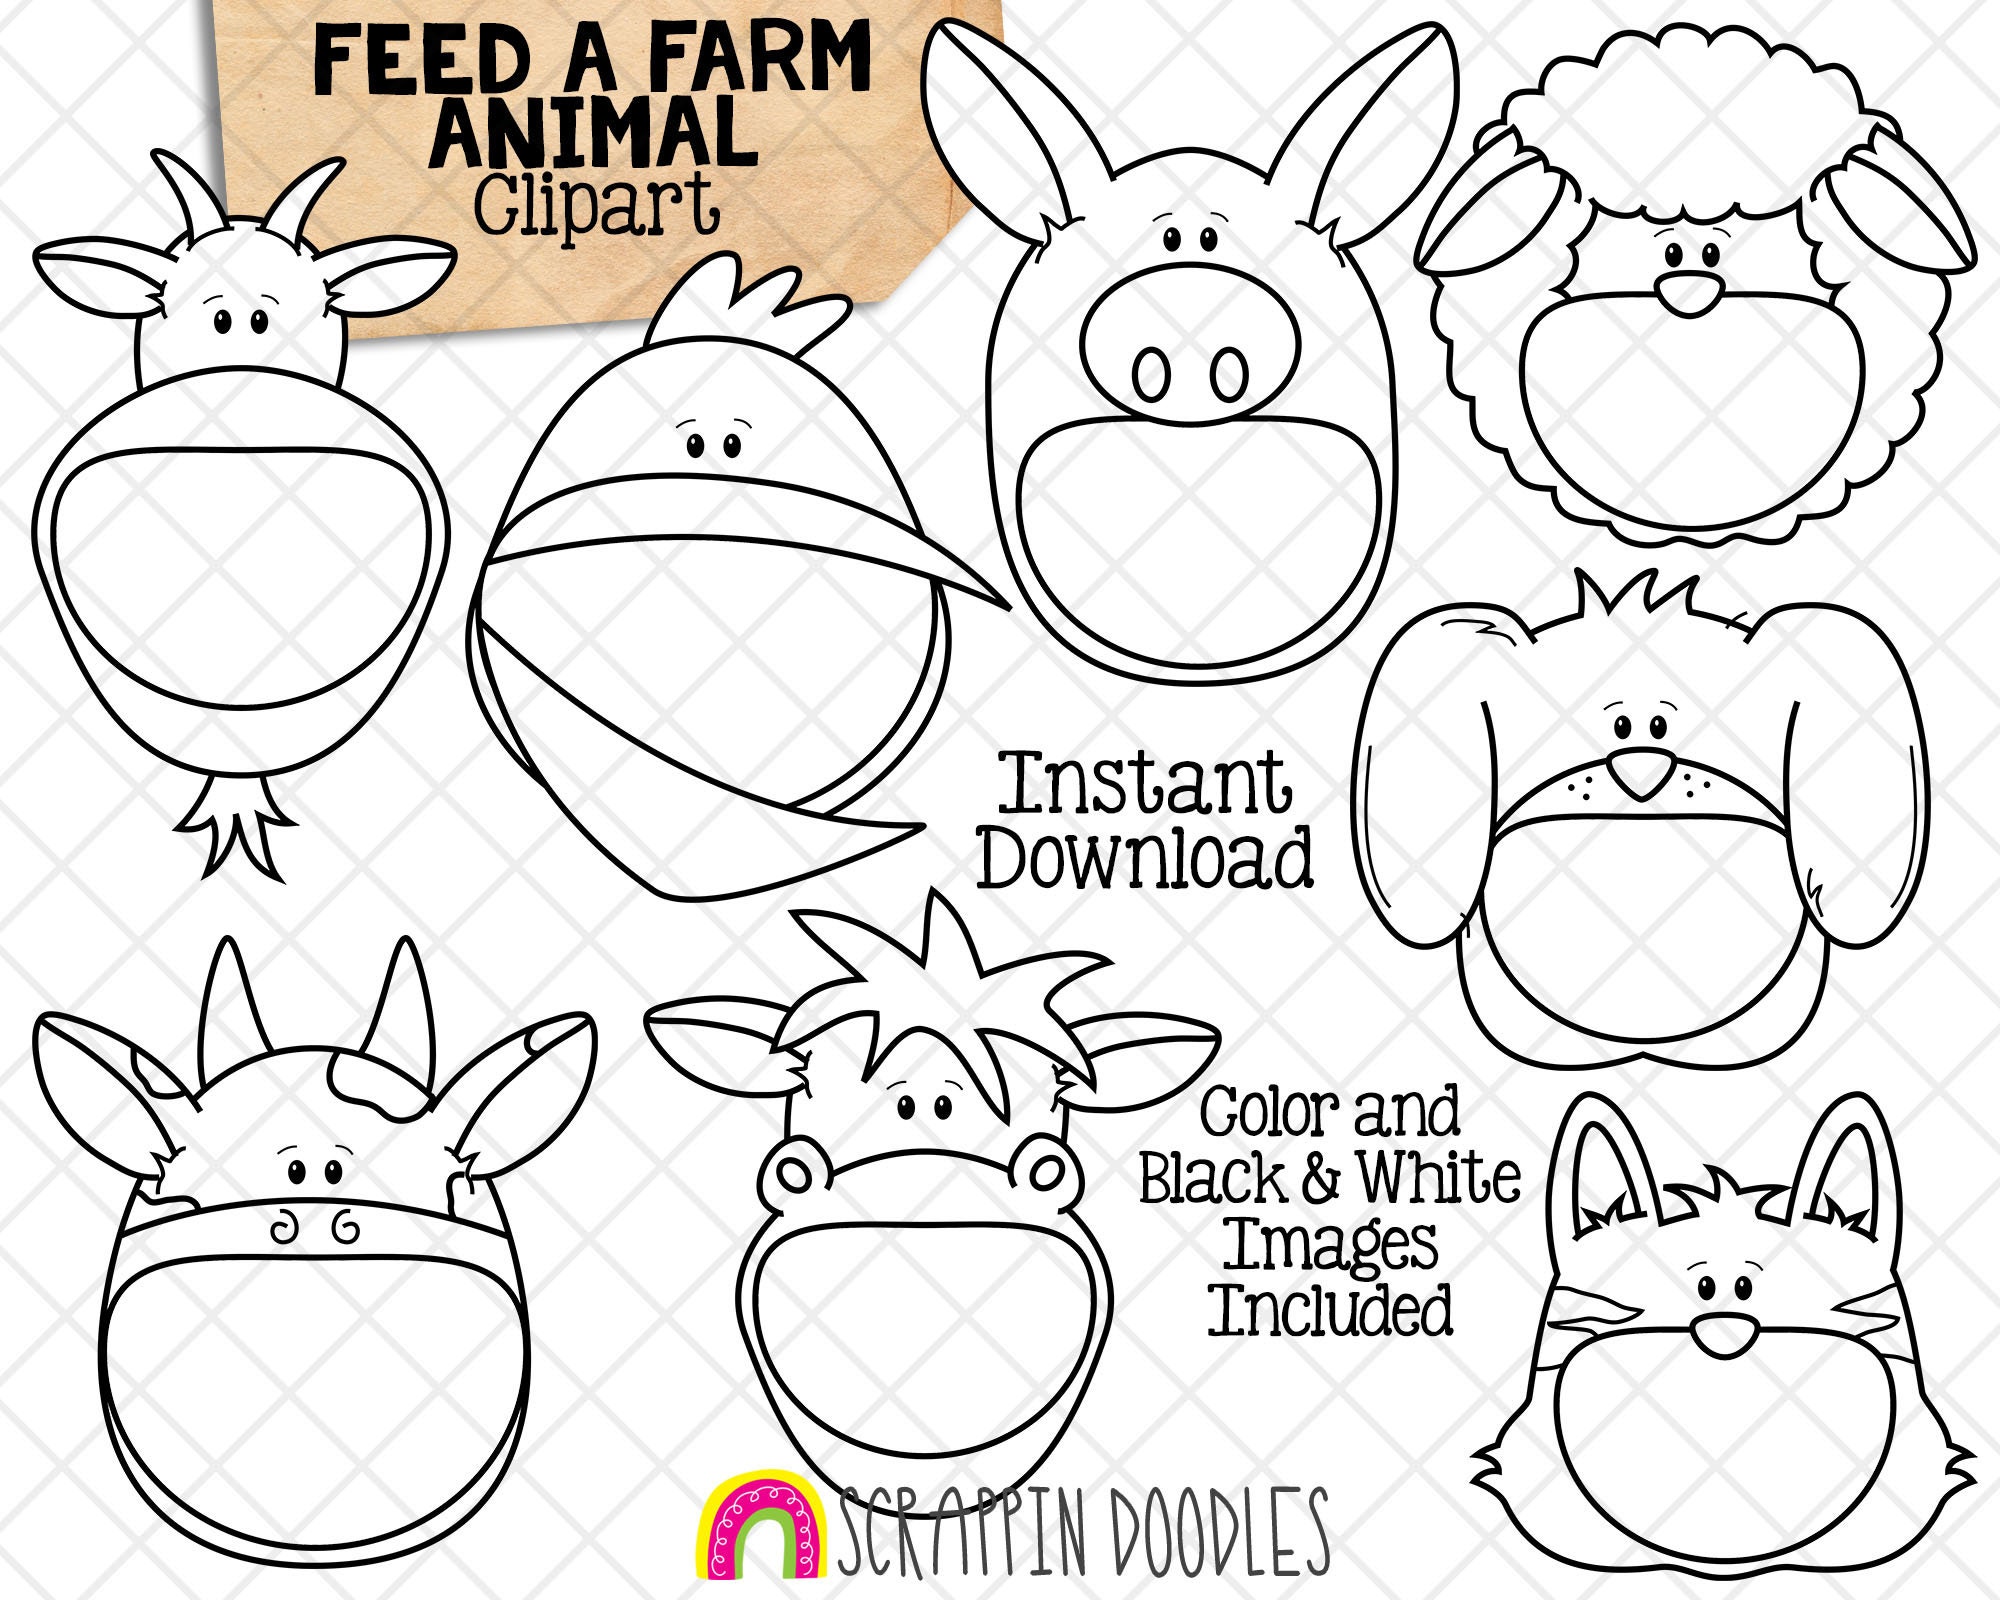 feed-a-farm-animal-clipart-feeding-open-mouth-animals-goat-etsy